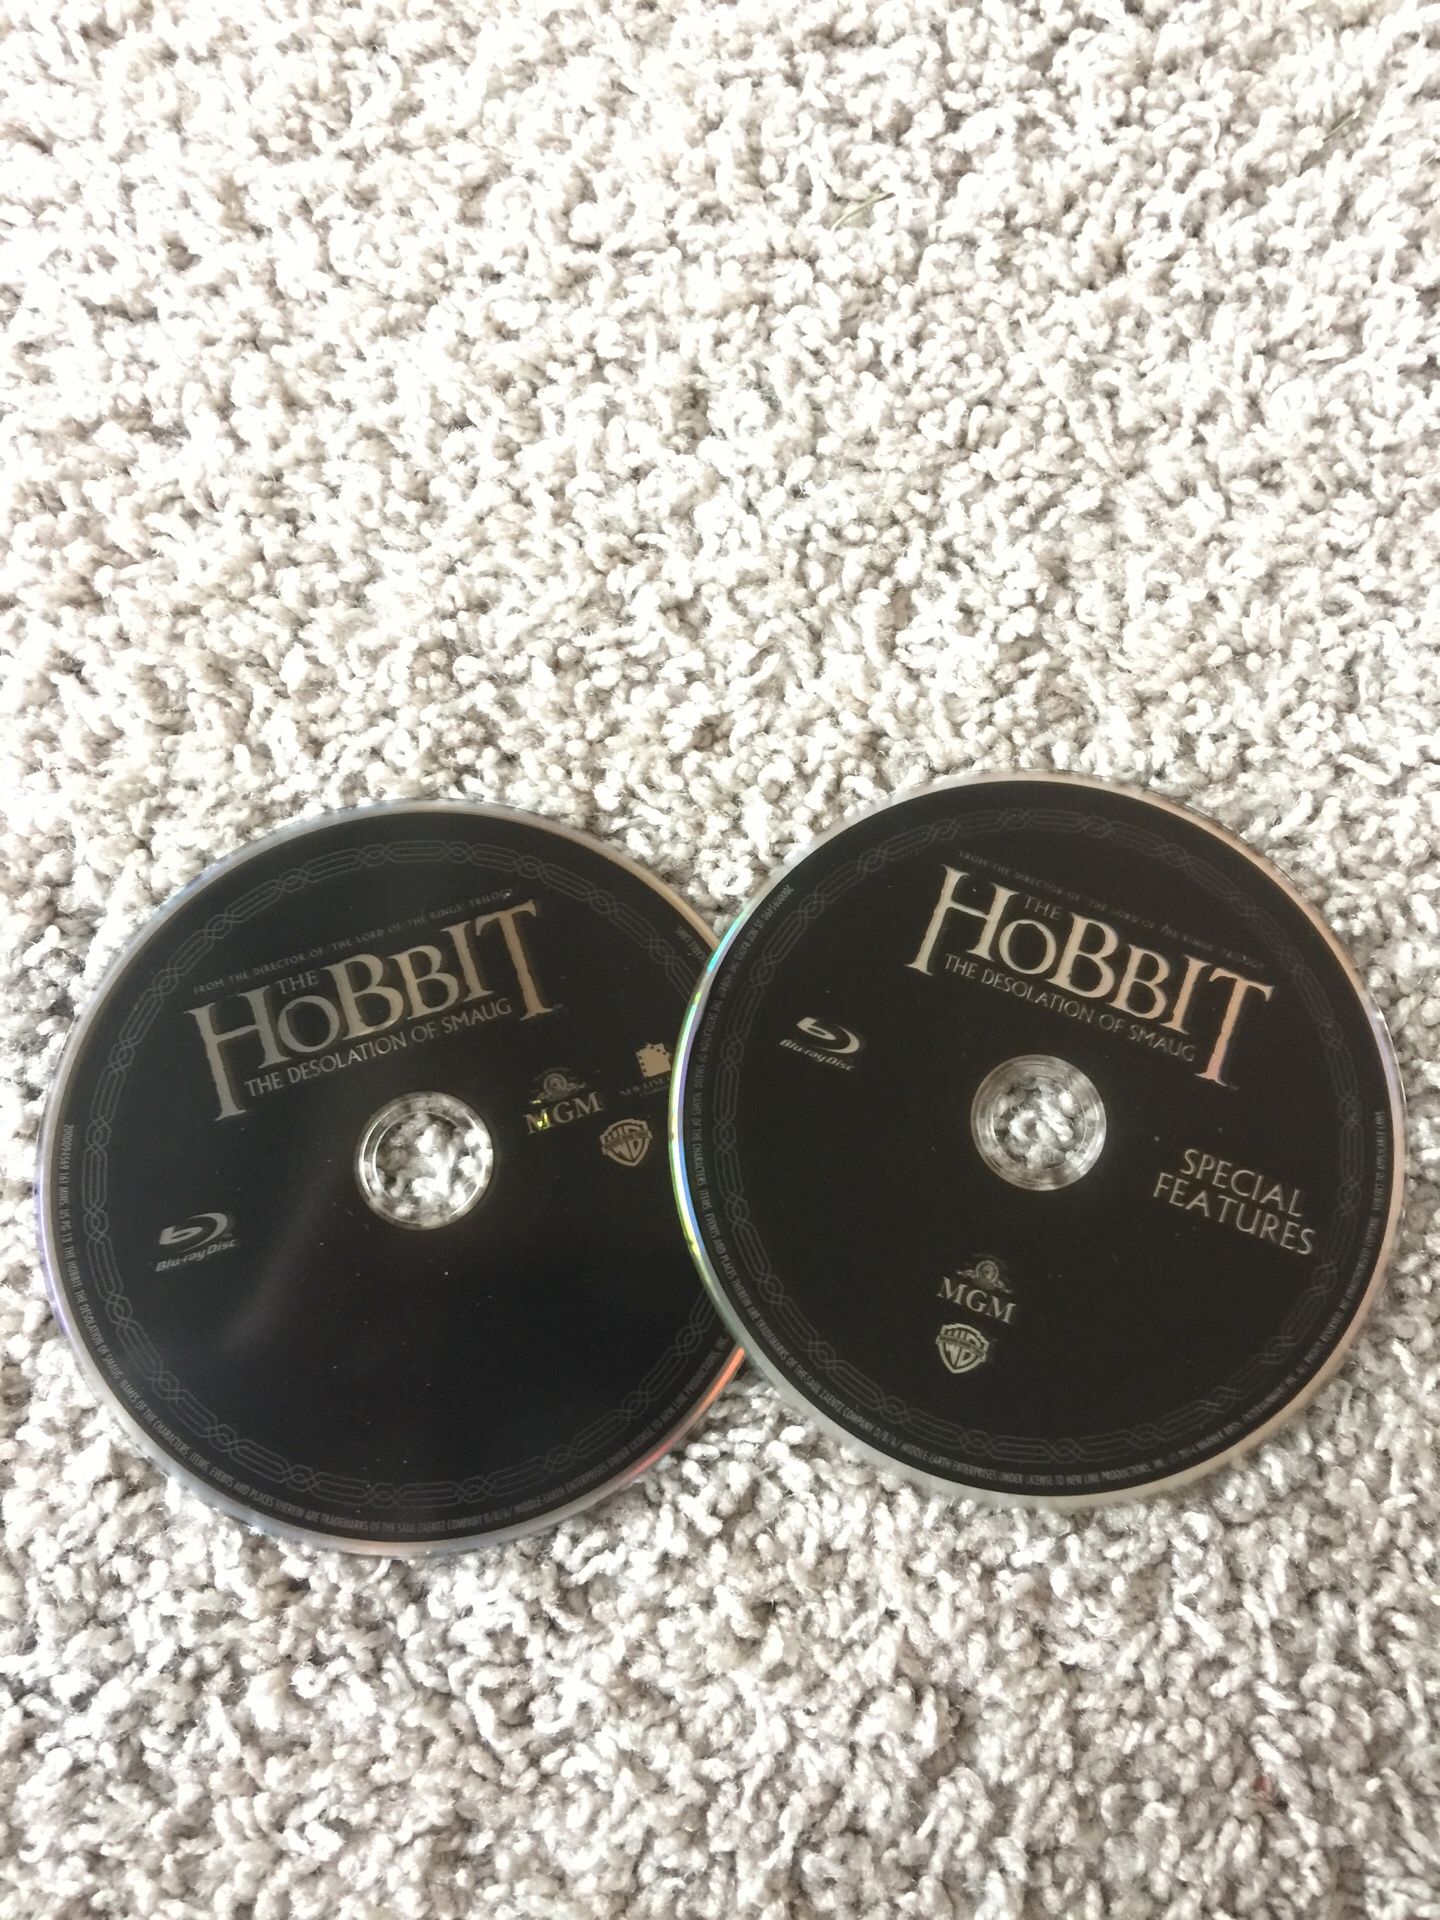 The Hobbit- The Desolation of Smaug Blu-ray